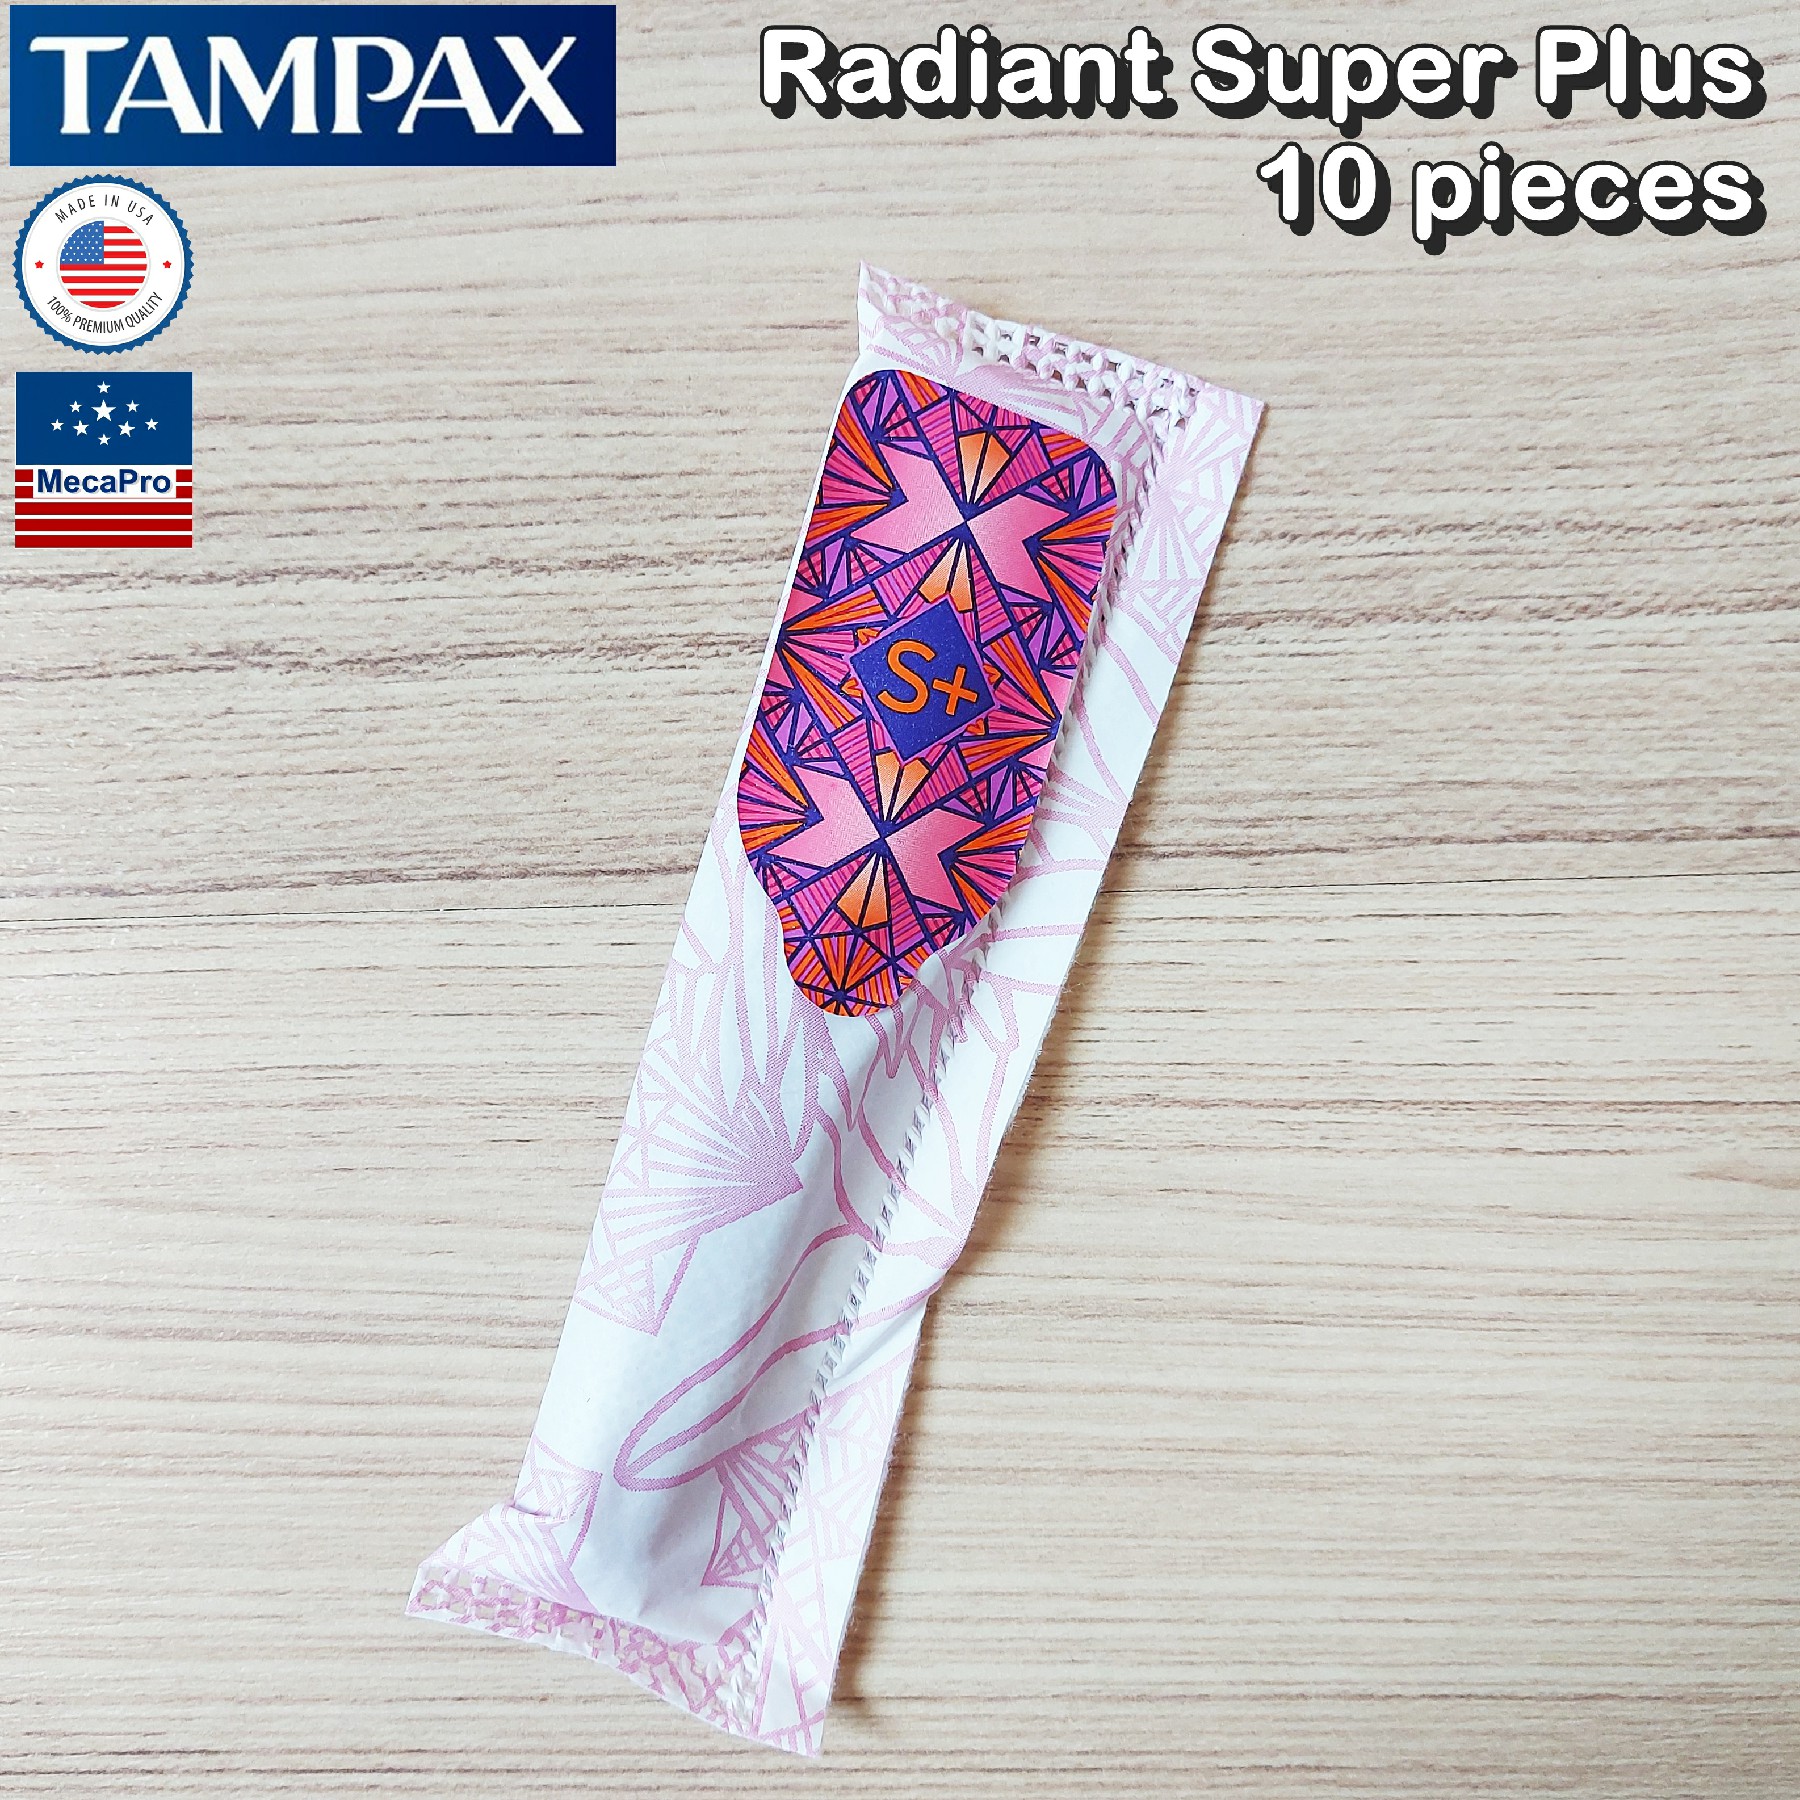 Tampax® Super Plus Absorbency Tampons Unscented 10 pieces ผ้าอนามัยแบบสอด 10 ชิ้น เหมาะกับวันมามาก ไร้กลิ่น